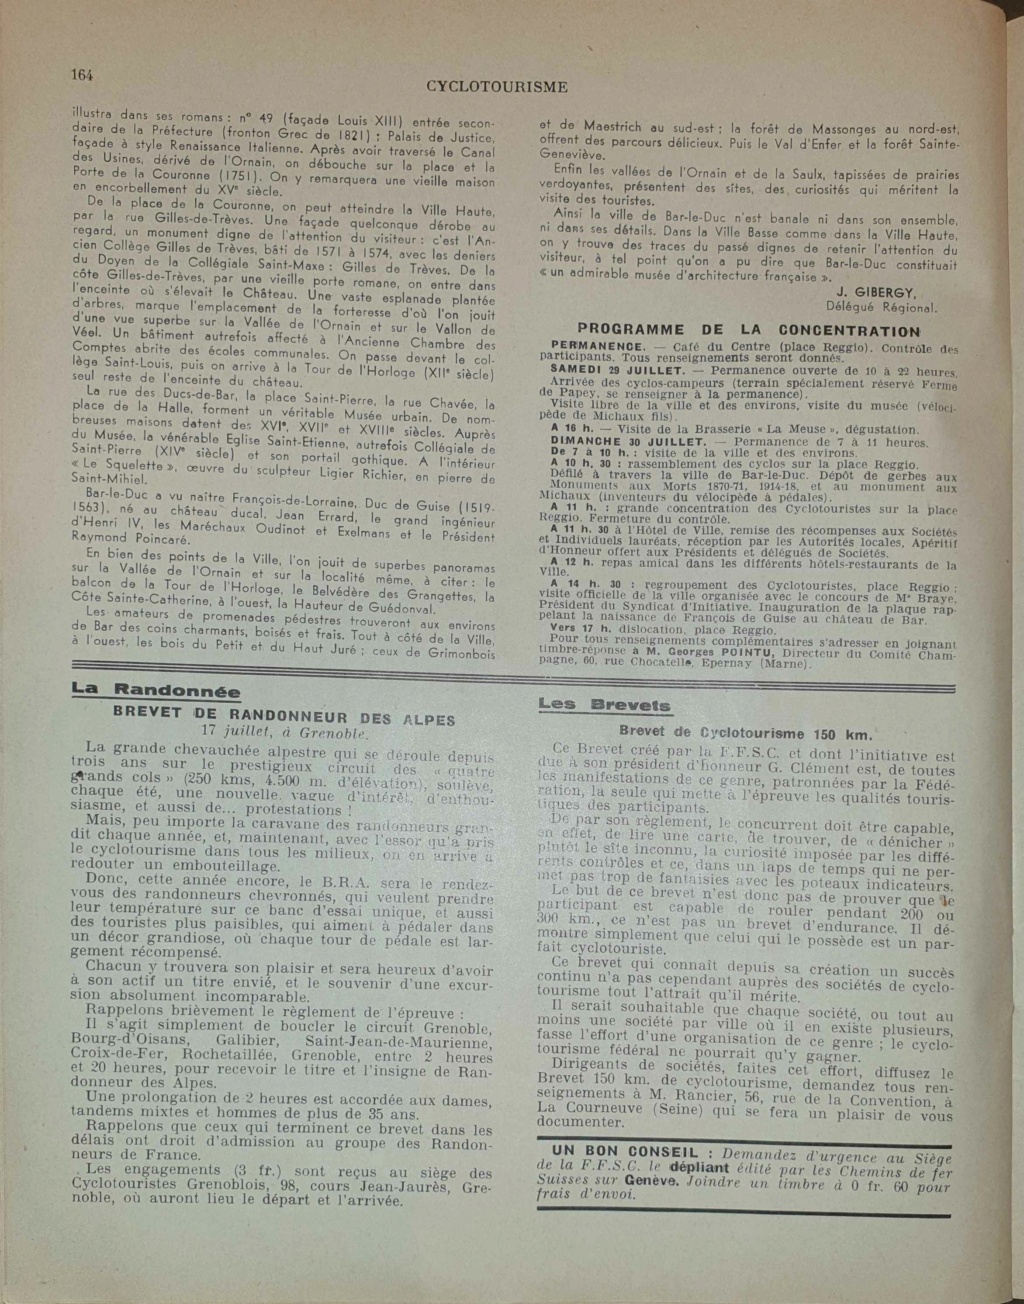 Cyclotourisme - Revue de la FFSC - No. 140 - Juillet 1939 Cyclot90